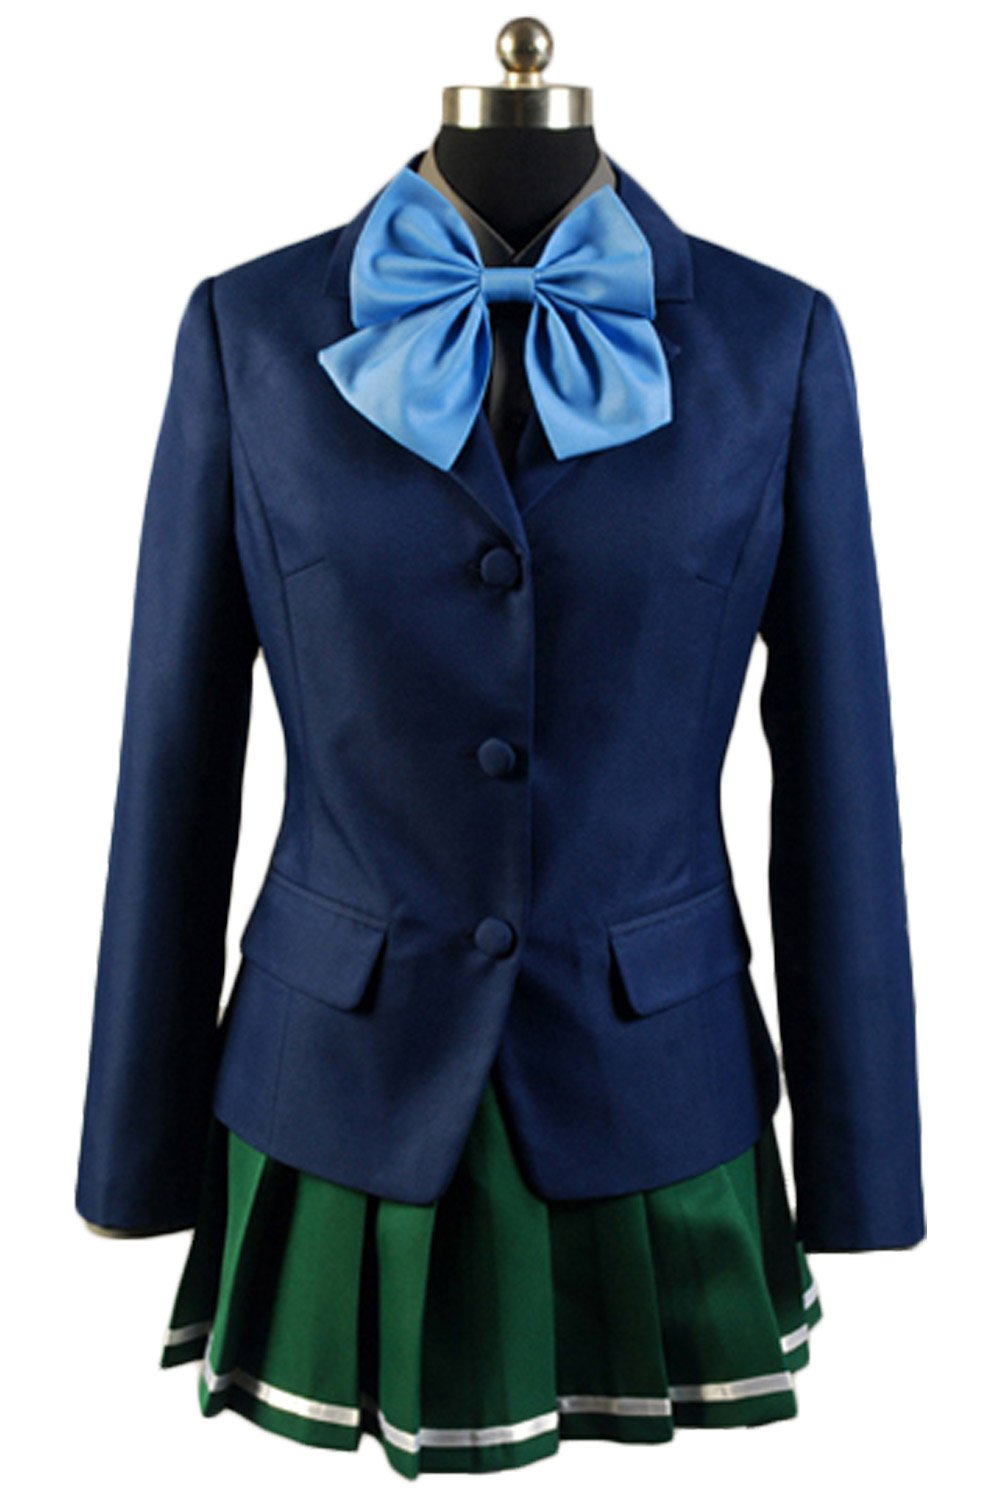 Accel World Kuroyukihimei School Uniform Cosplay Costume